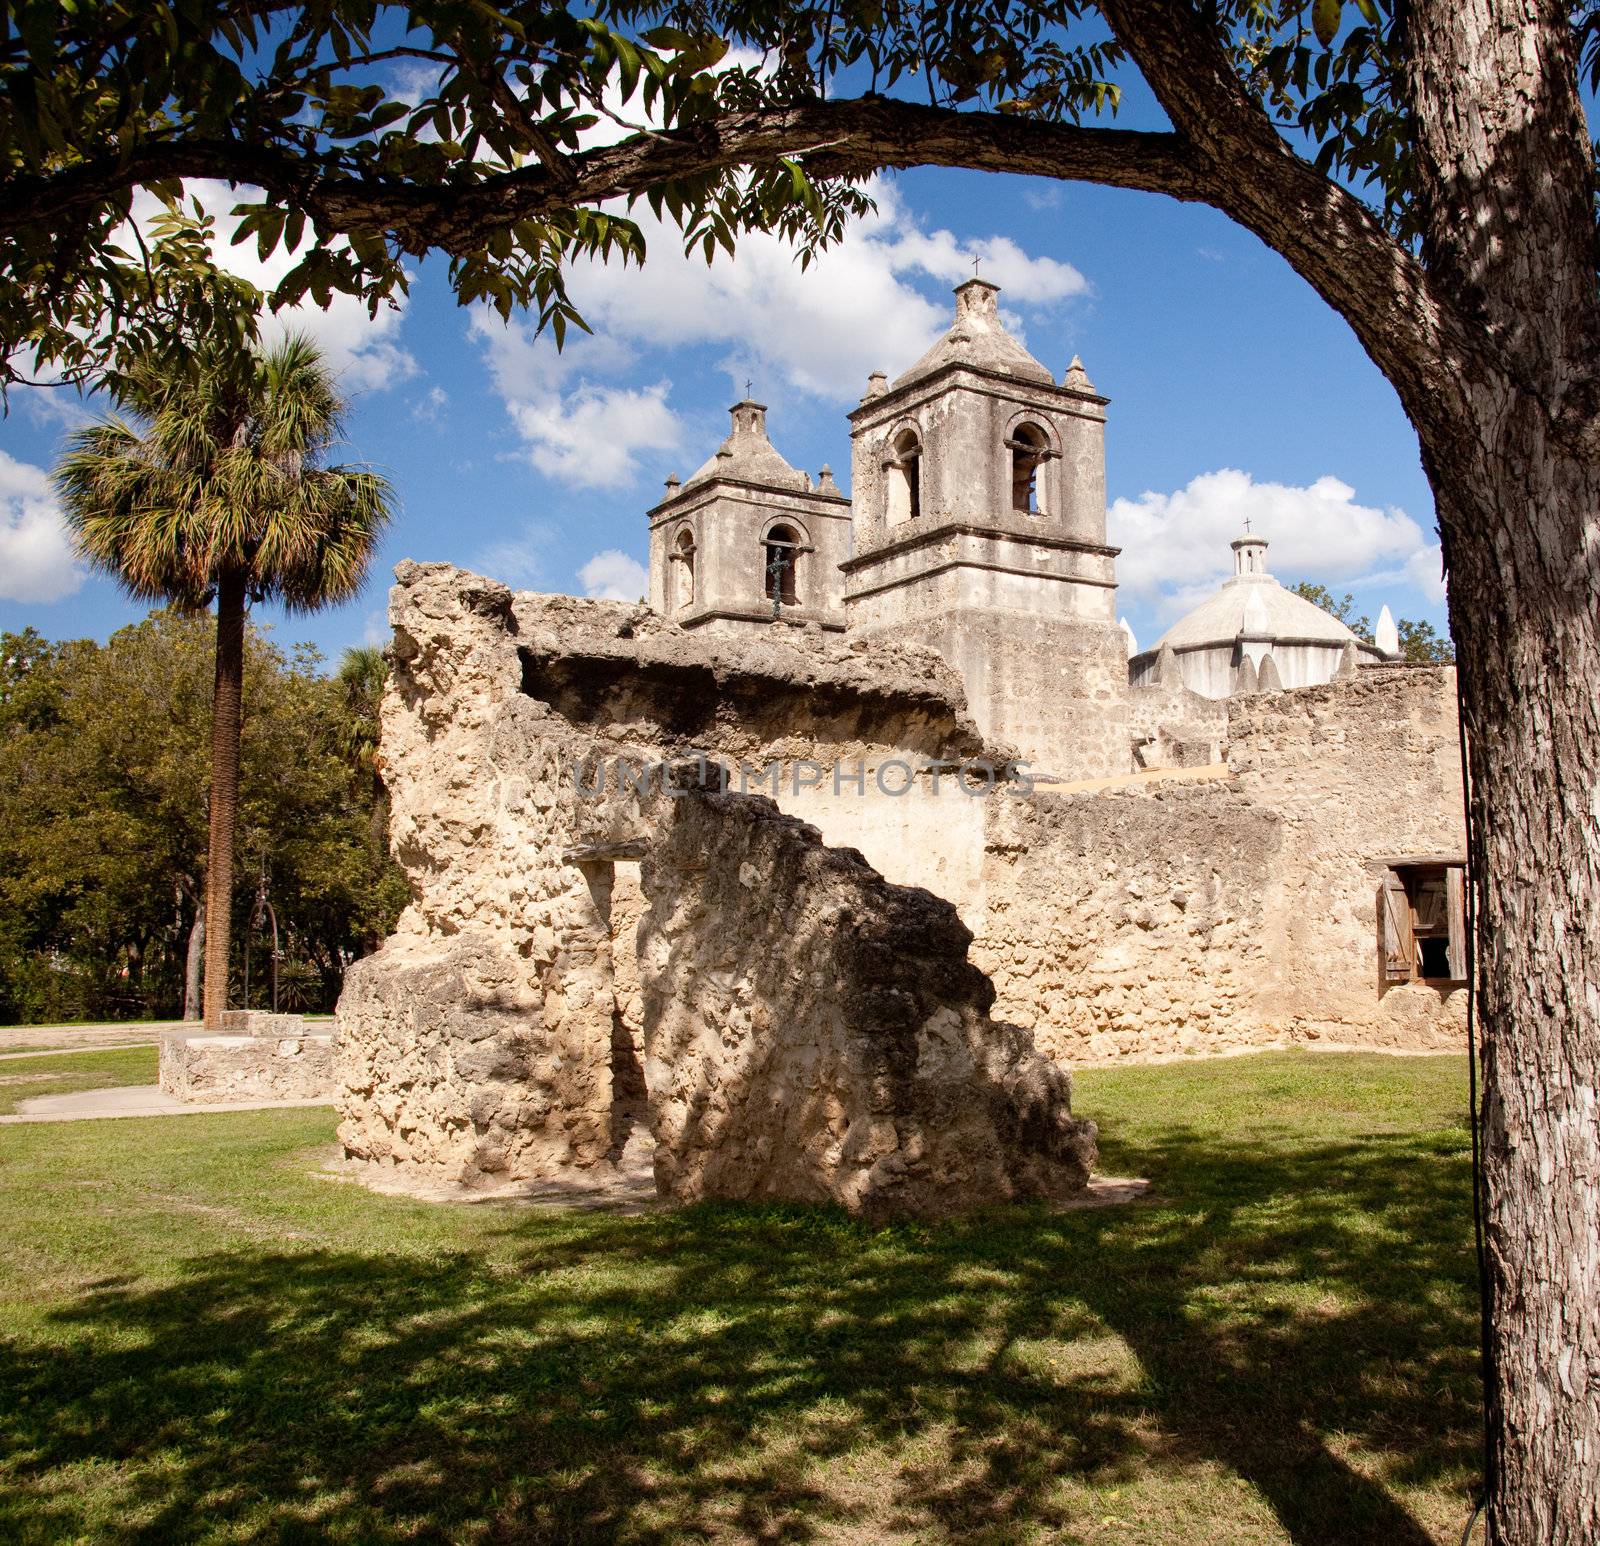 San Antonio Mission Concepcion in Texas by steheap